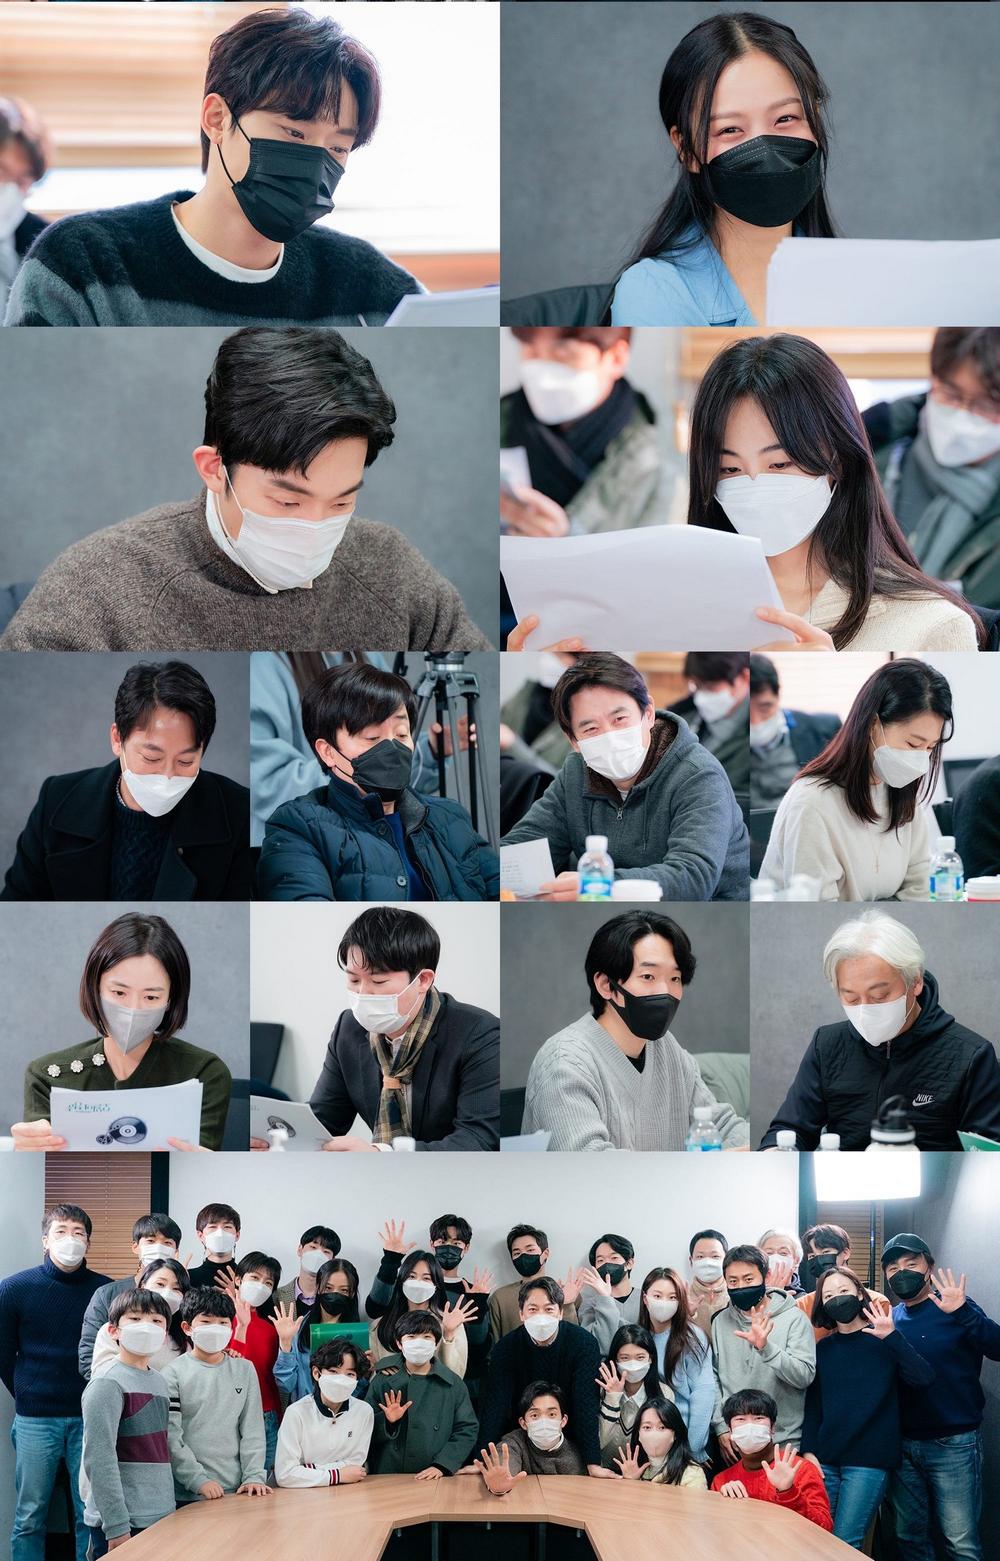 Reuni \'Sweet Home\', Lee Dong Hyun-Go Min Si Pamer Chemistry di Sesi Baca Naskah \'Youth of May\'